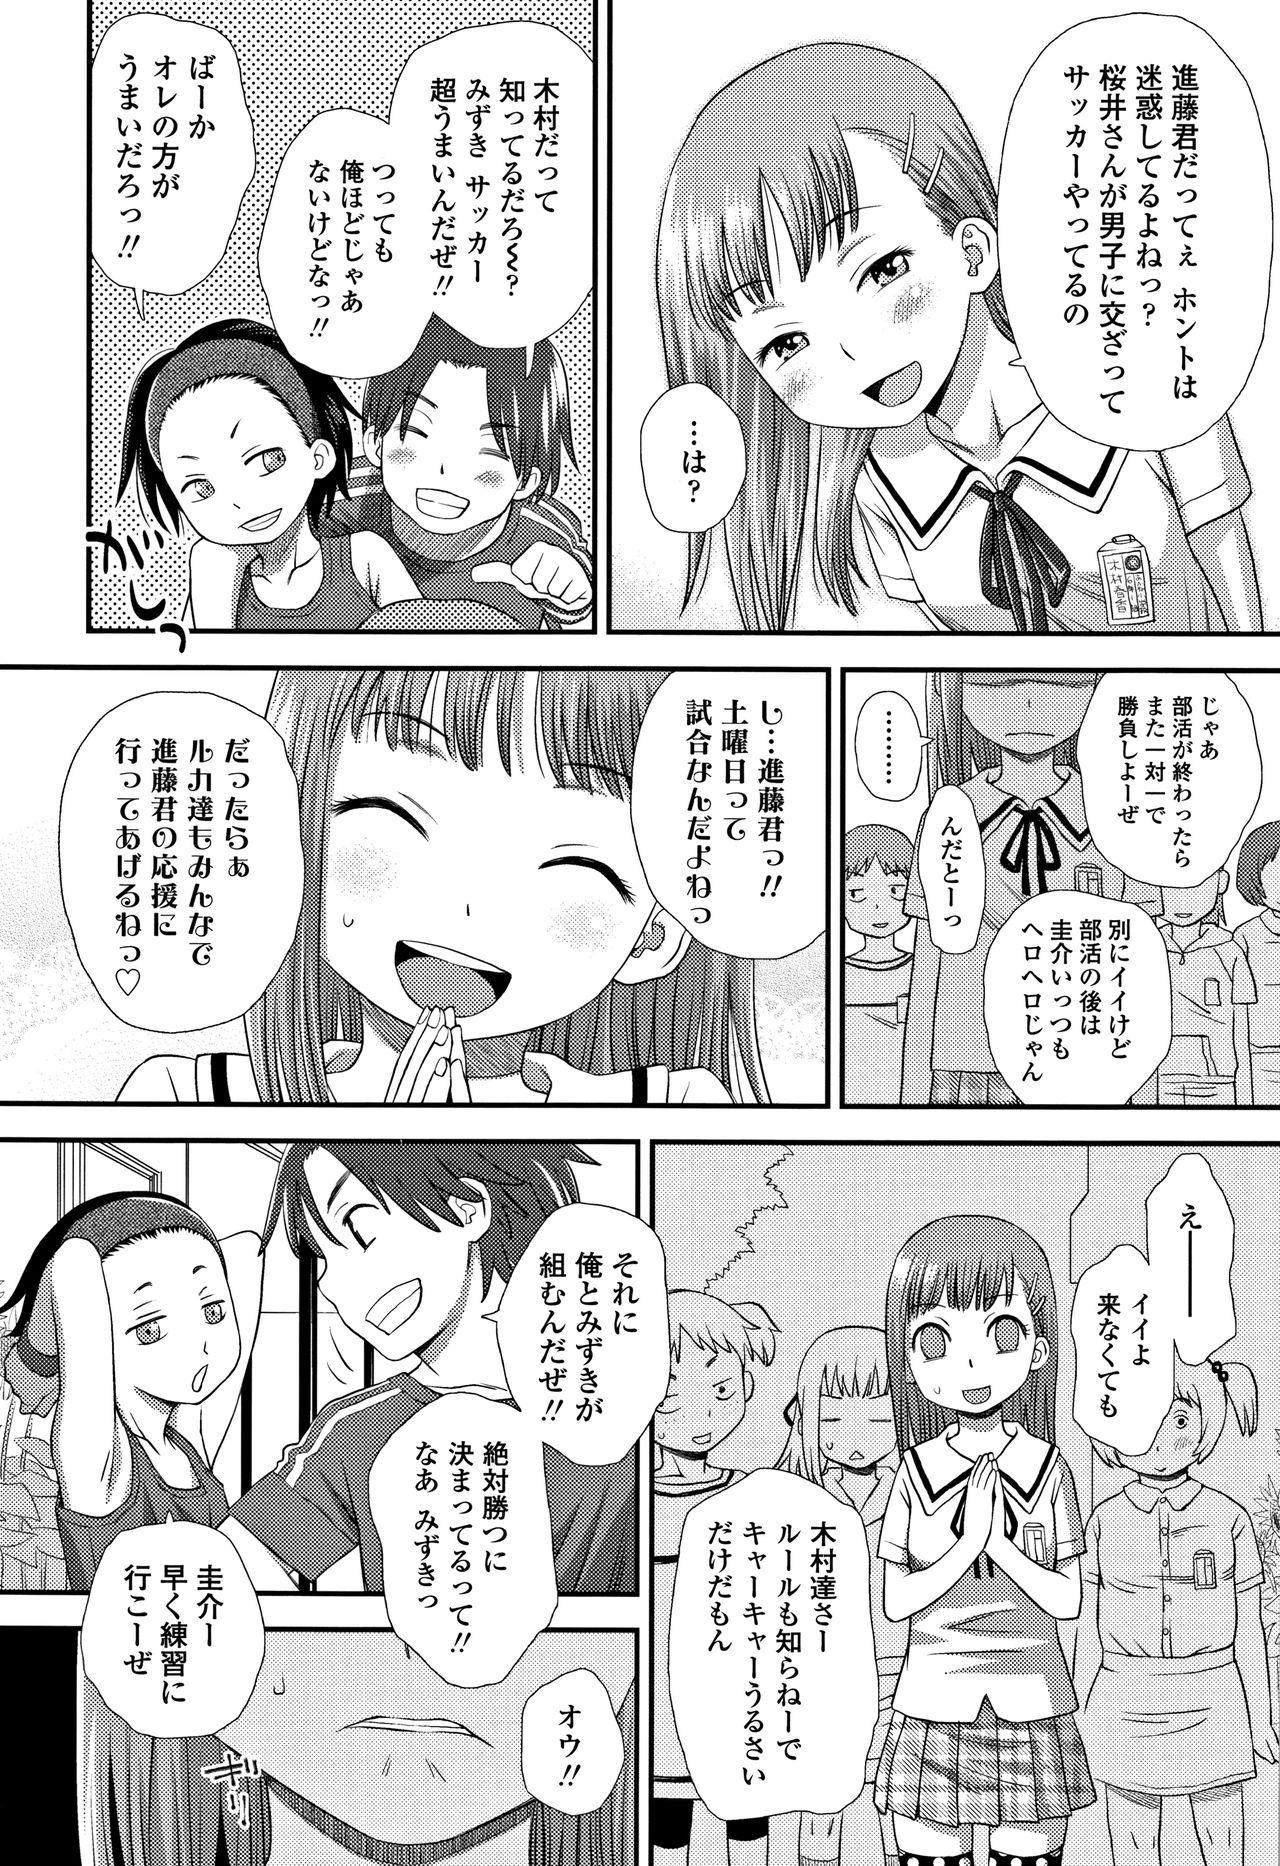 The Tomodachi no Wa Coeds - Page 7